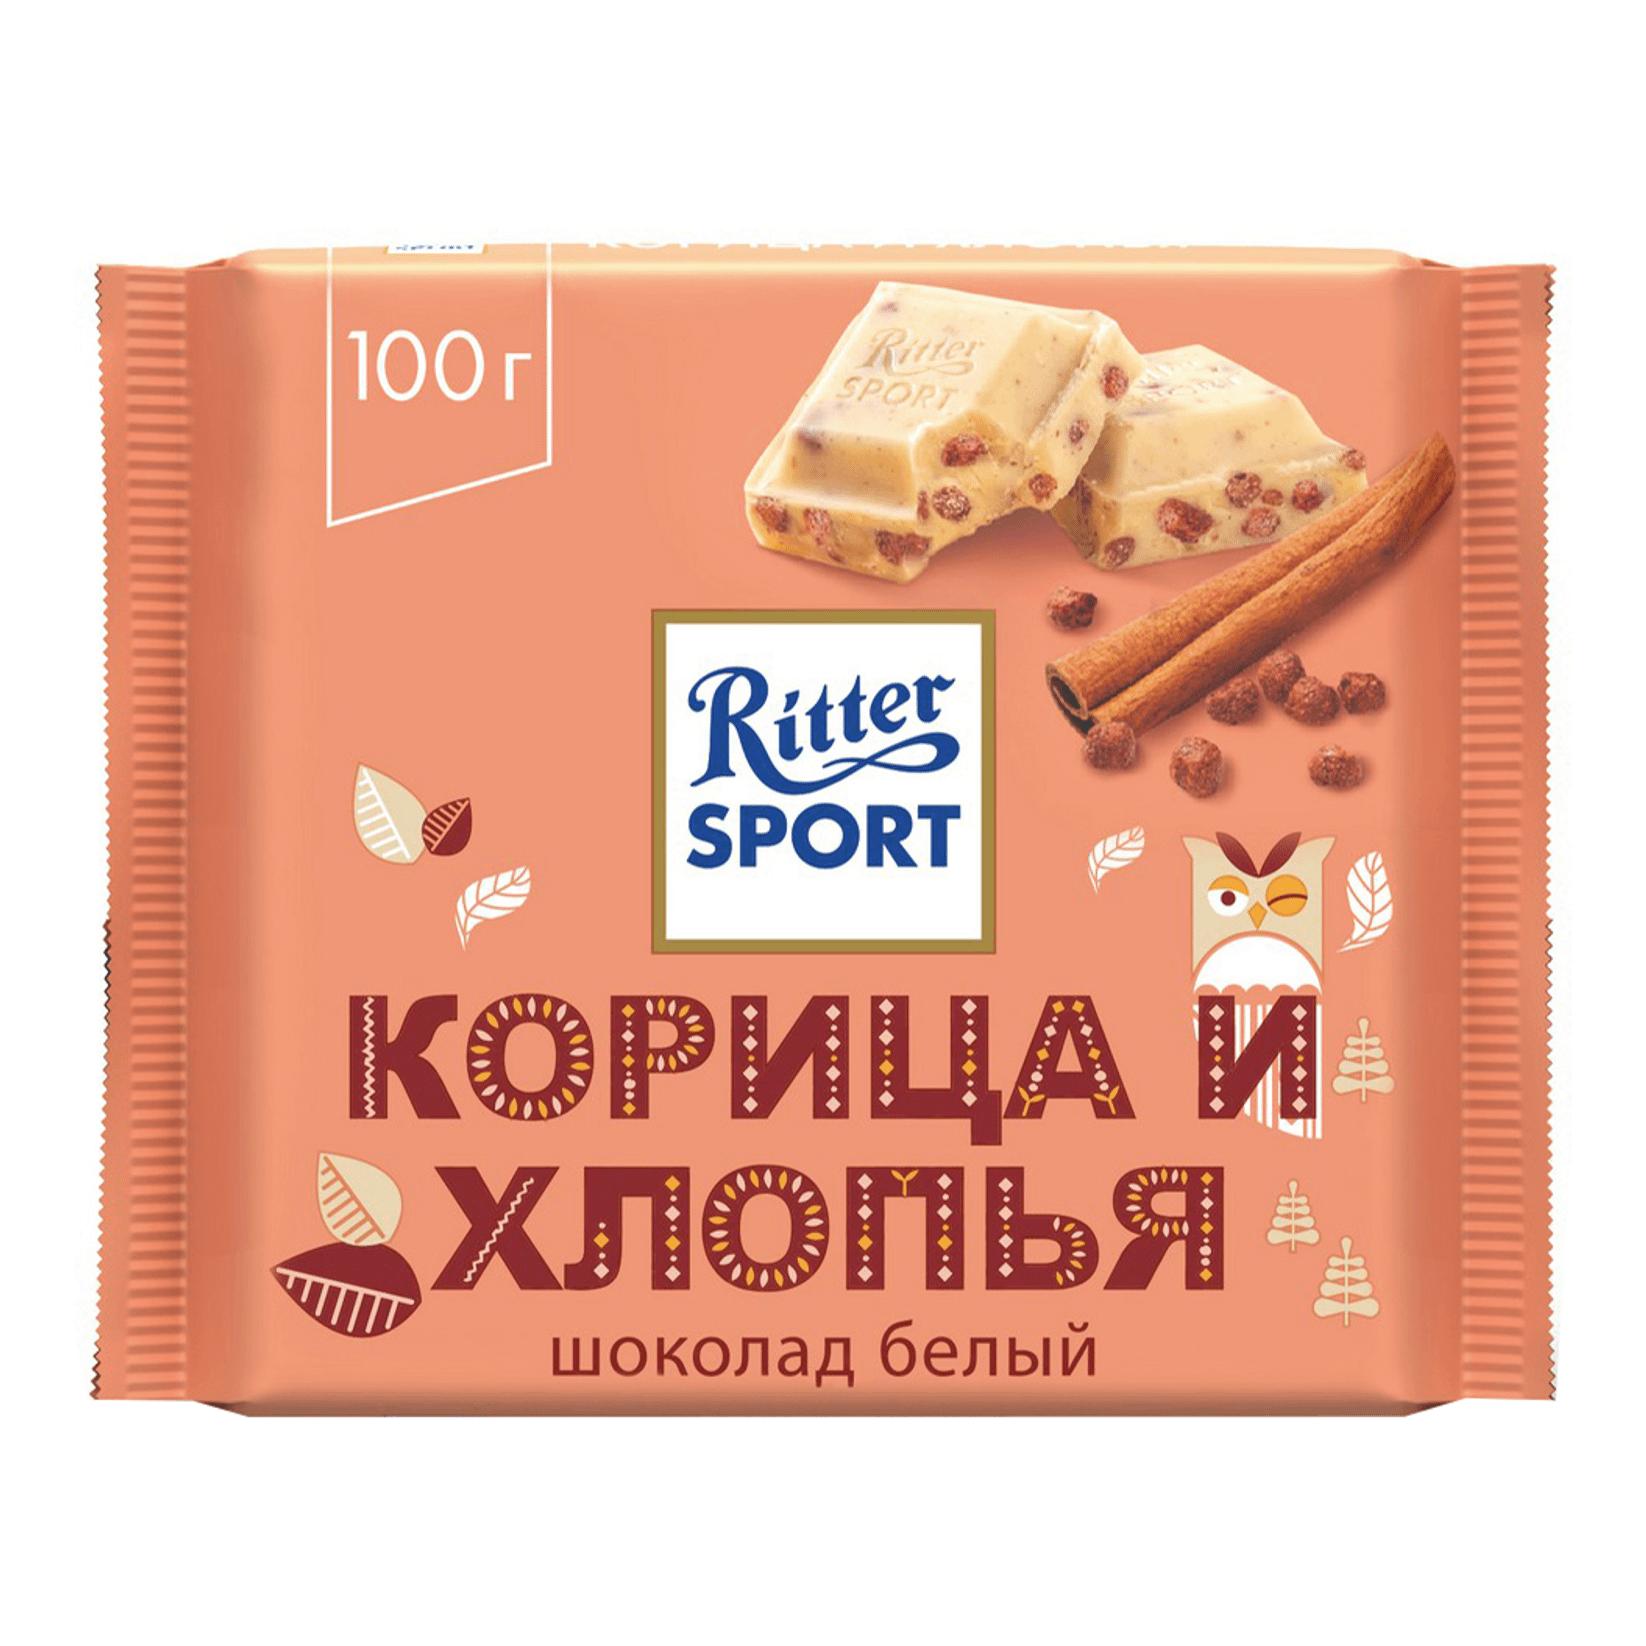 Шоколад Ritter Sport белый корица и хлопья,100 гр., флоу-пак